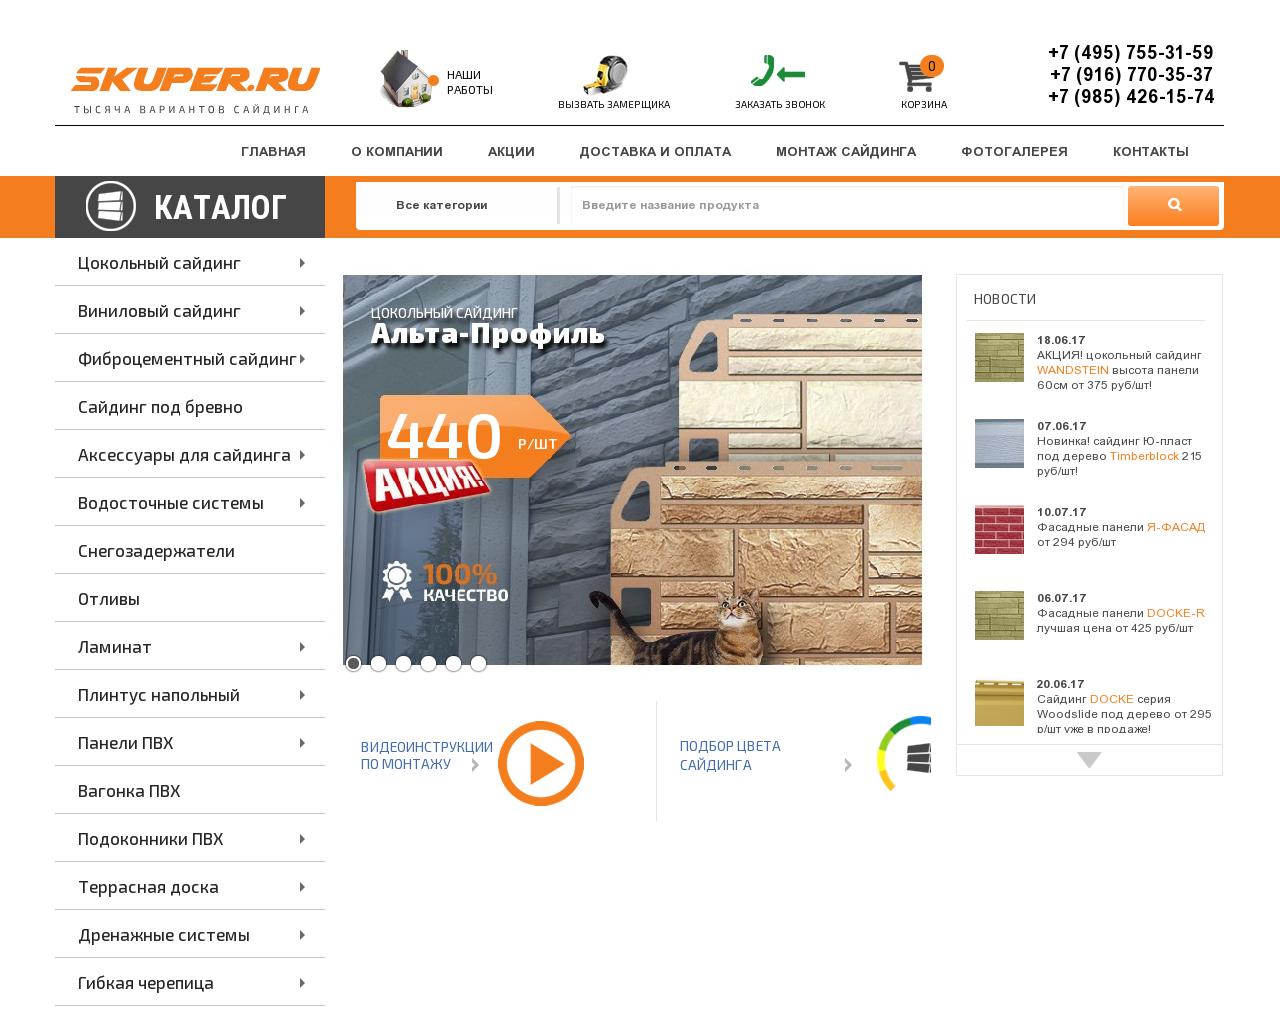 Изображение сайта skuper.ru в разрешении 1280x1024